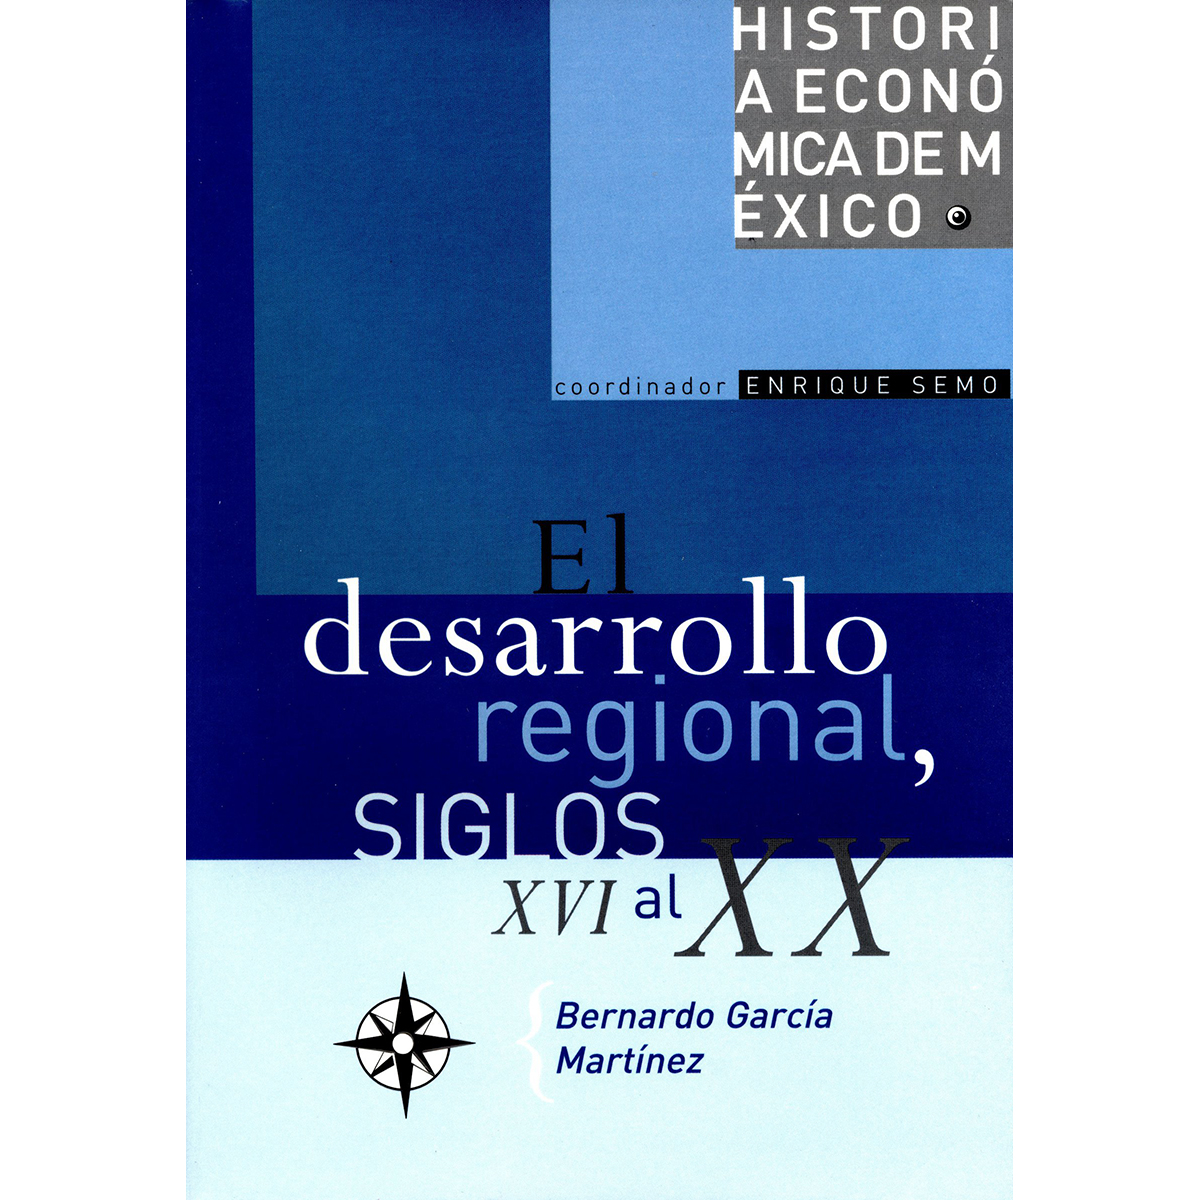 HISTORIA ECONÓMICA DE MÉXICO, VOL. 8. EL DESARROLLO REGIONAL, SIGLOS XVI AL XX